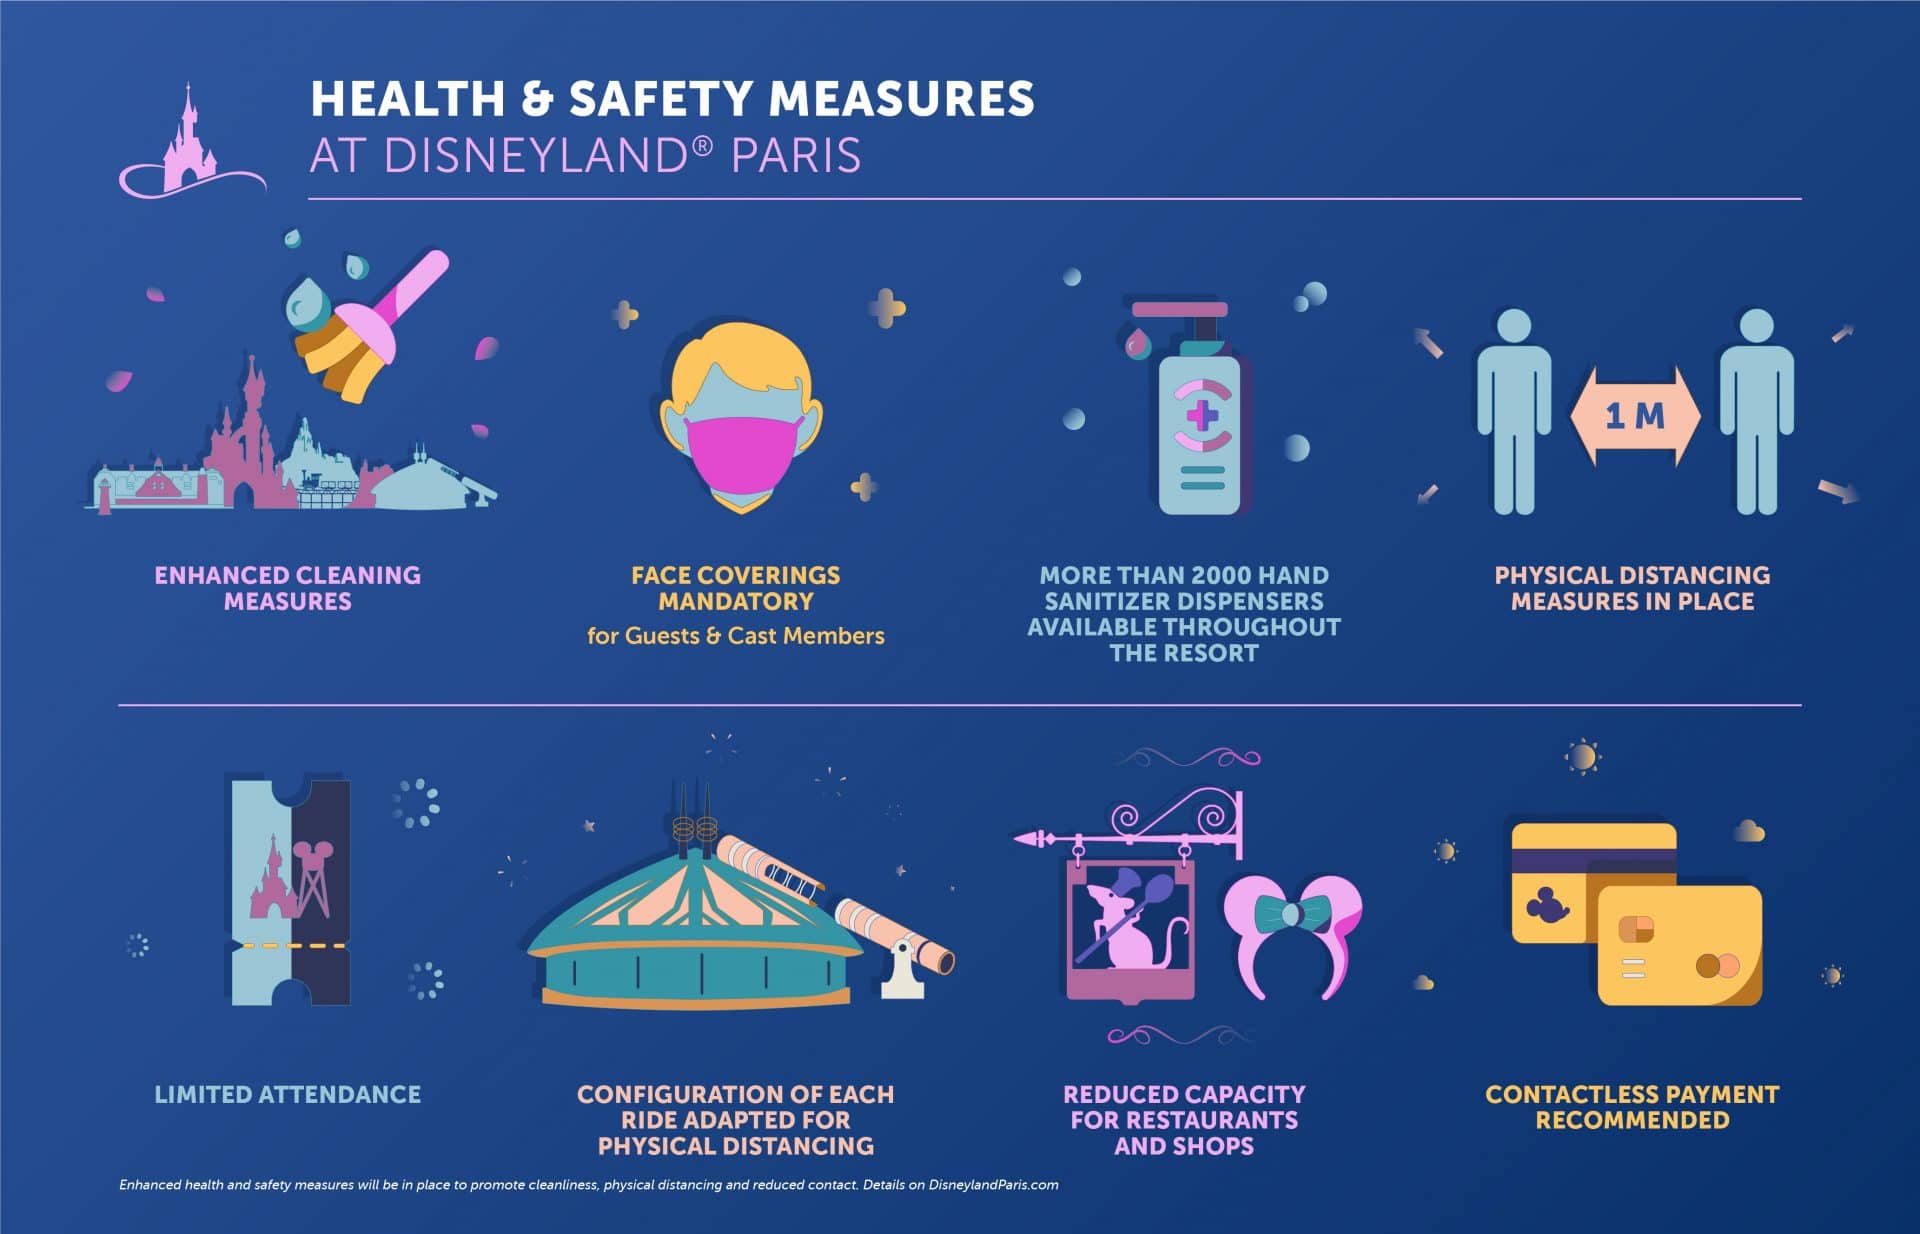 Disneyland Paris Infographic - Health & Safety Measures for Disneyland Paris